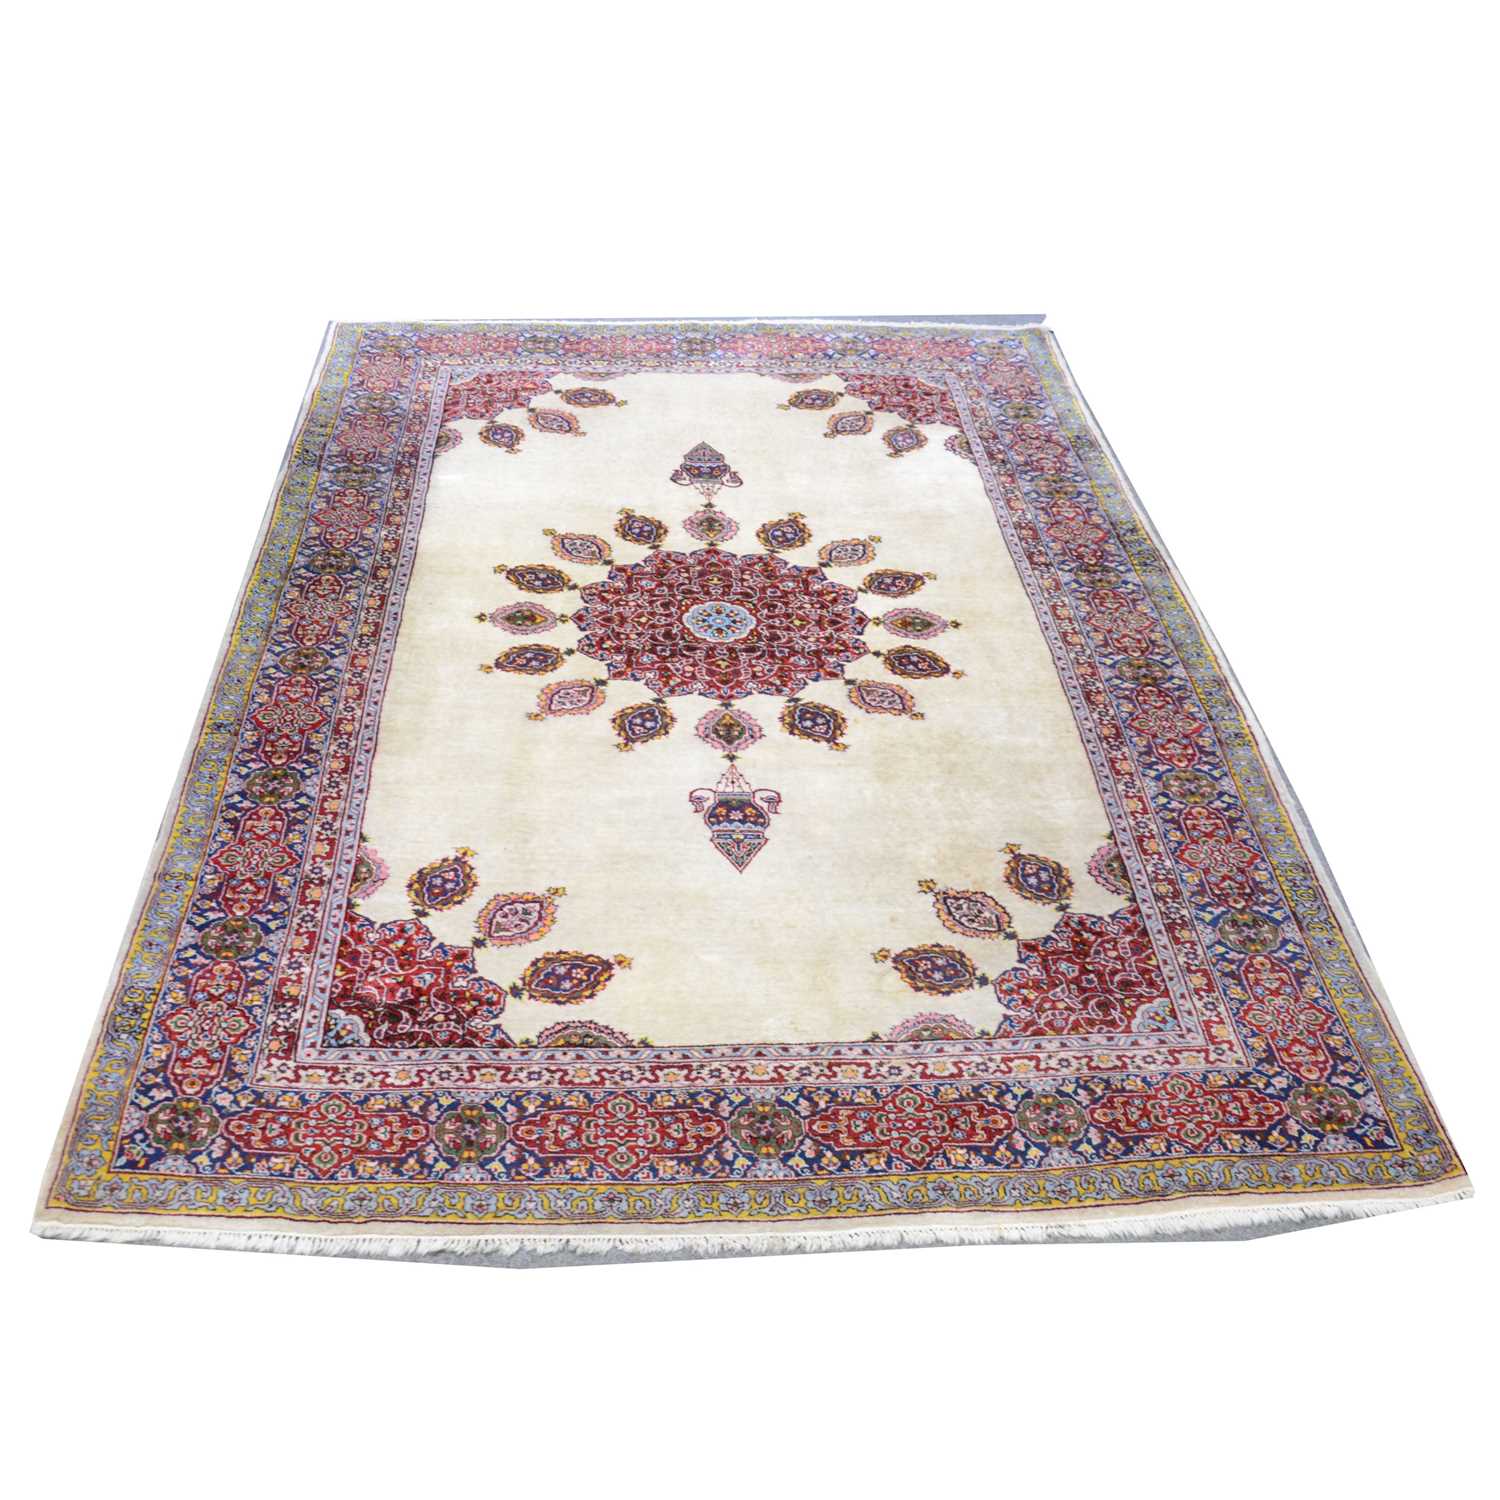 Isfahan style rug,